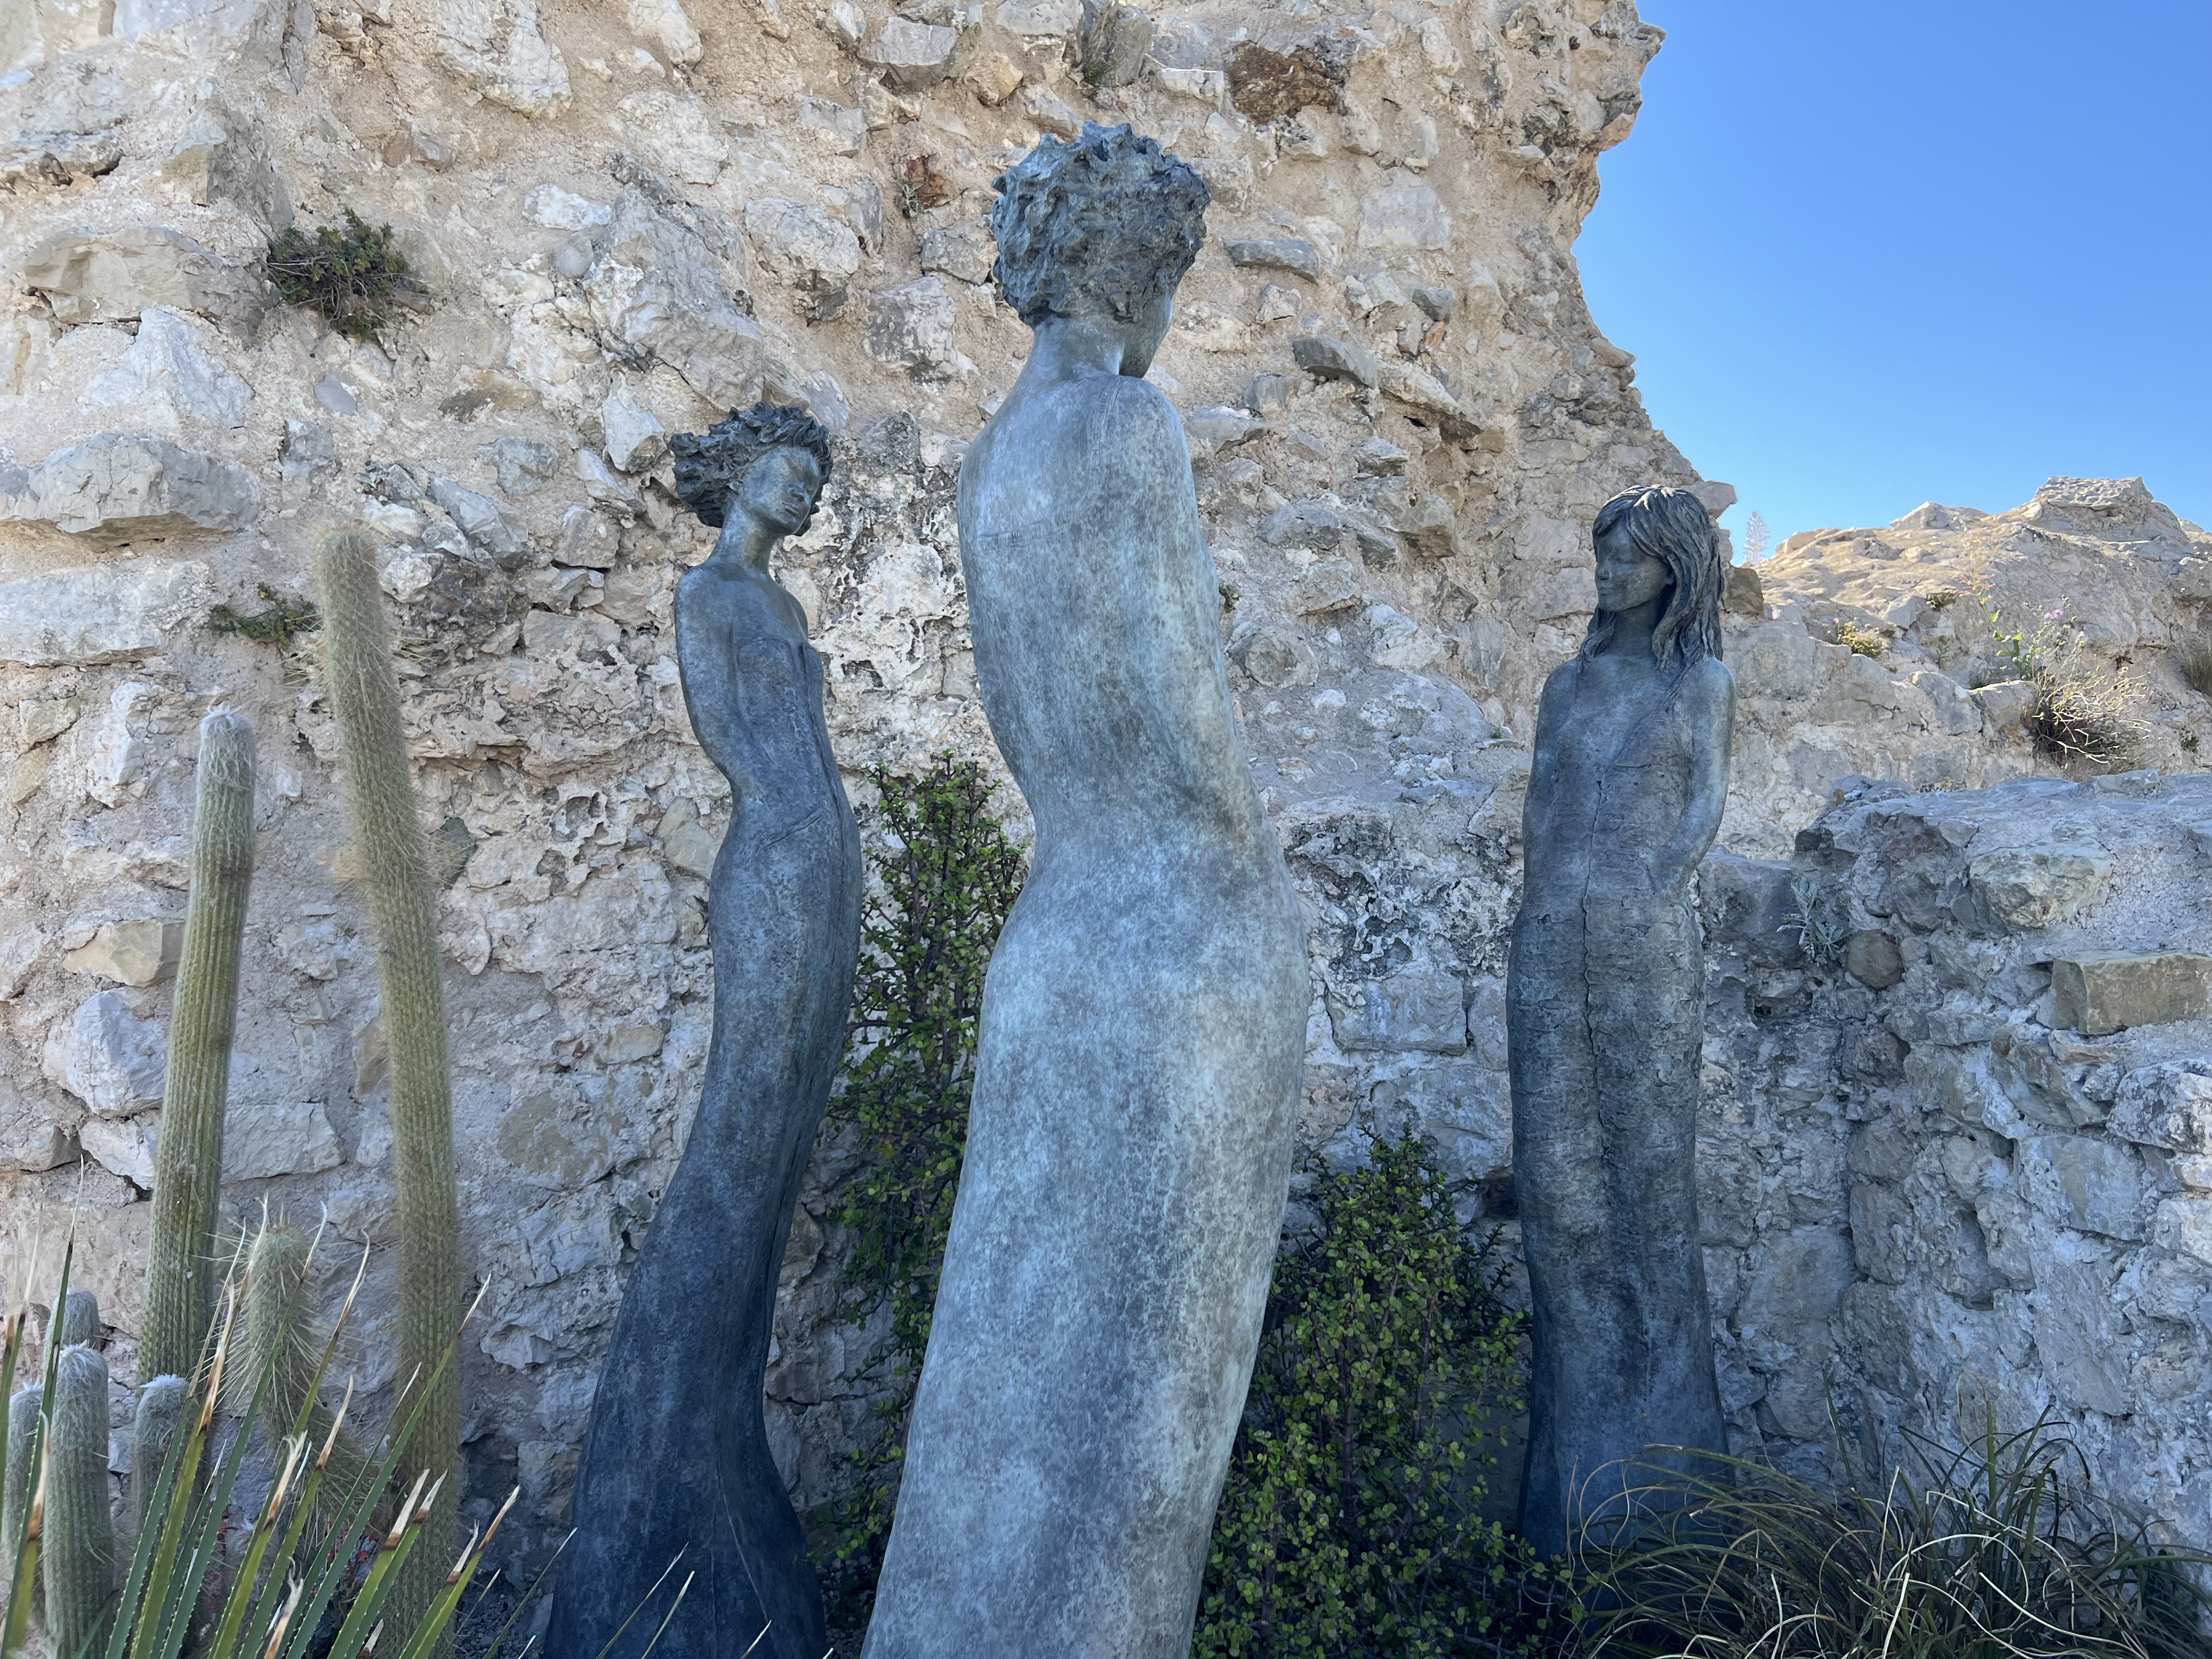 Maternal statues in the garden